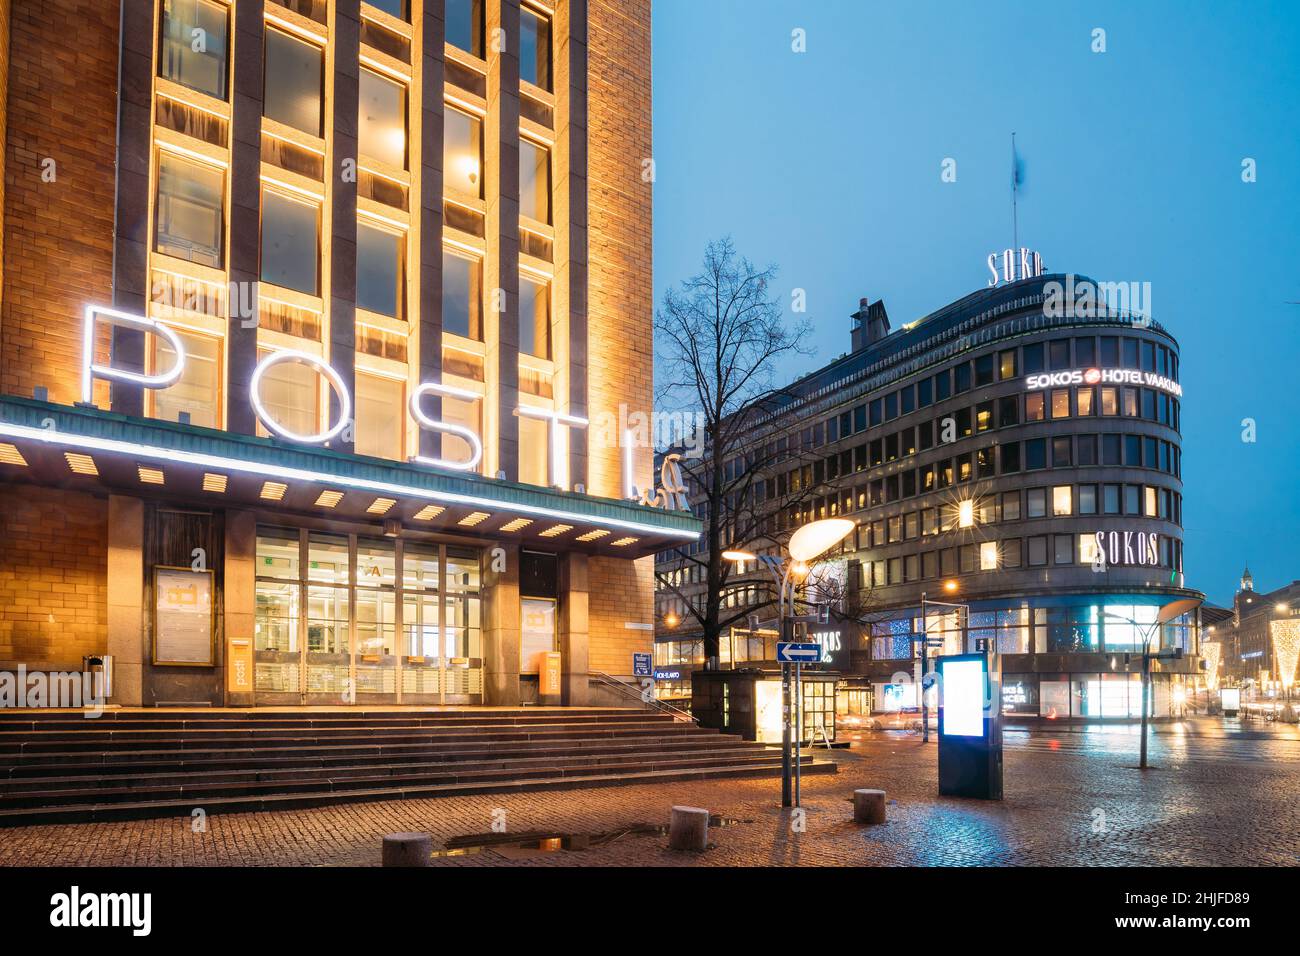 Helsinki, Finland. Post Office Building And Original Sokos Hotel In Evening Night Illumination. Stock Photo